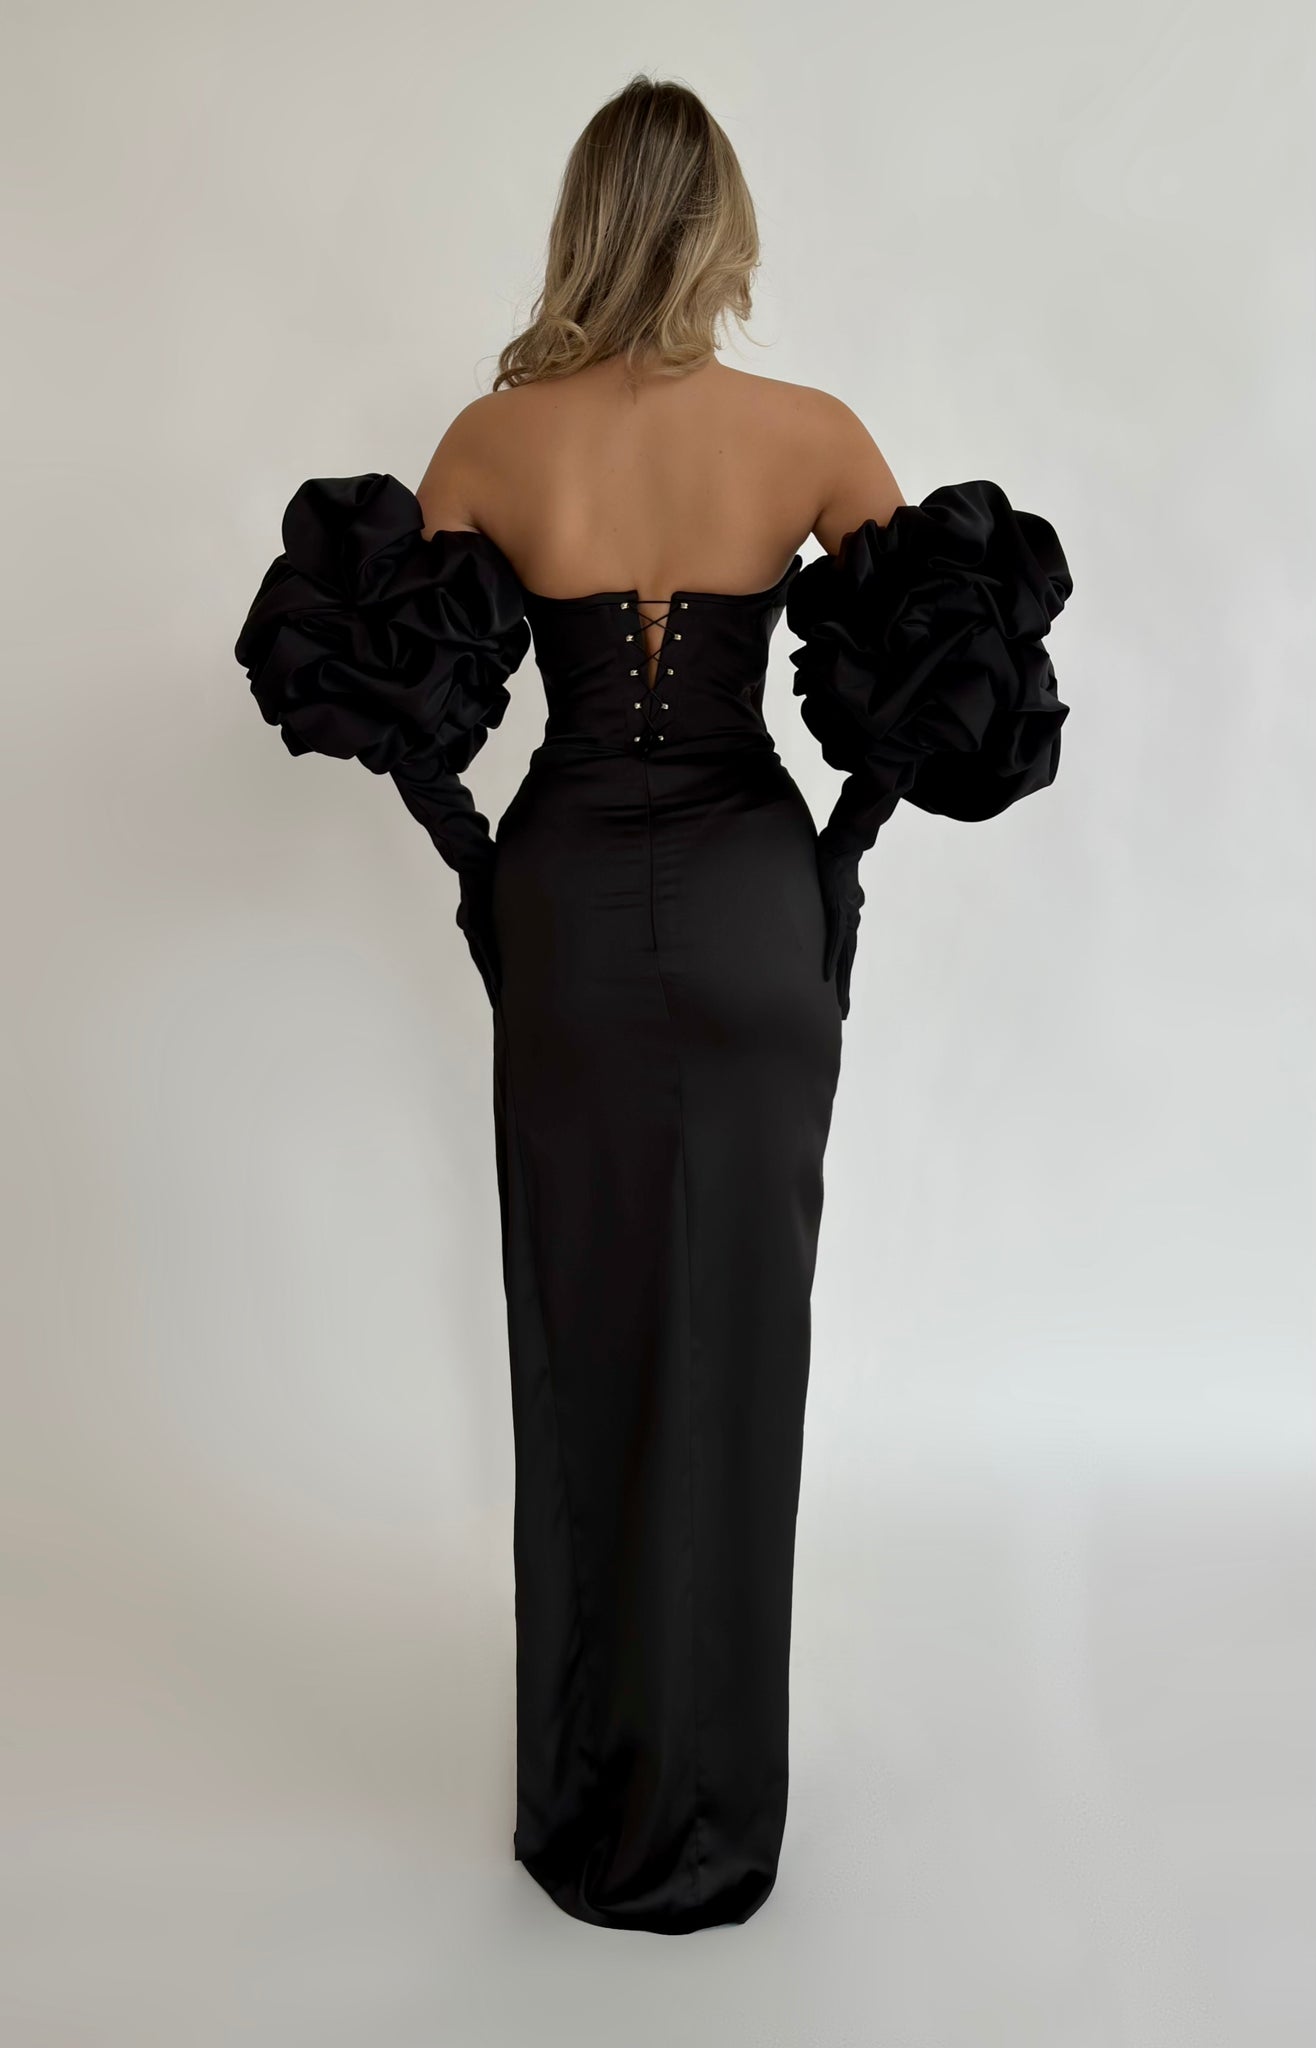 MINNA Fashion DONATELLA Black Silky Strapless Cut Out Mermaid Formal Dress W/ Gloves